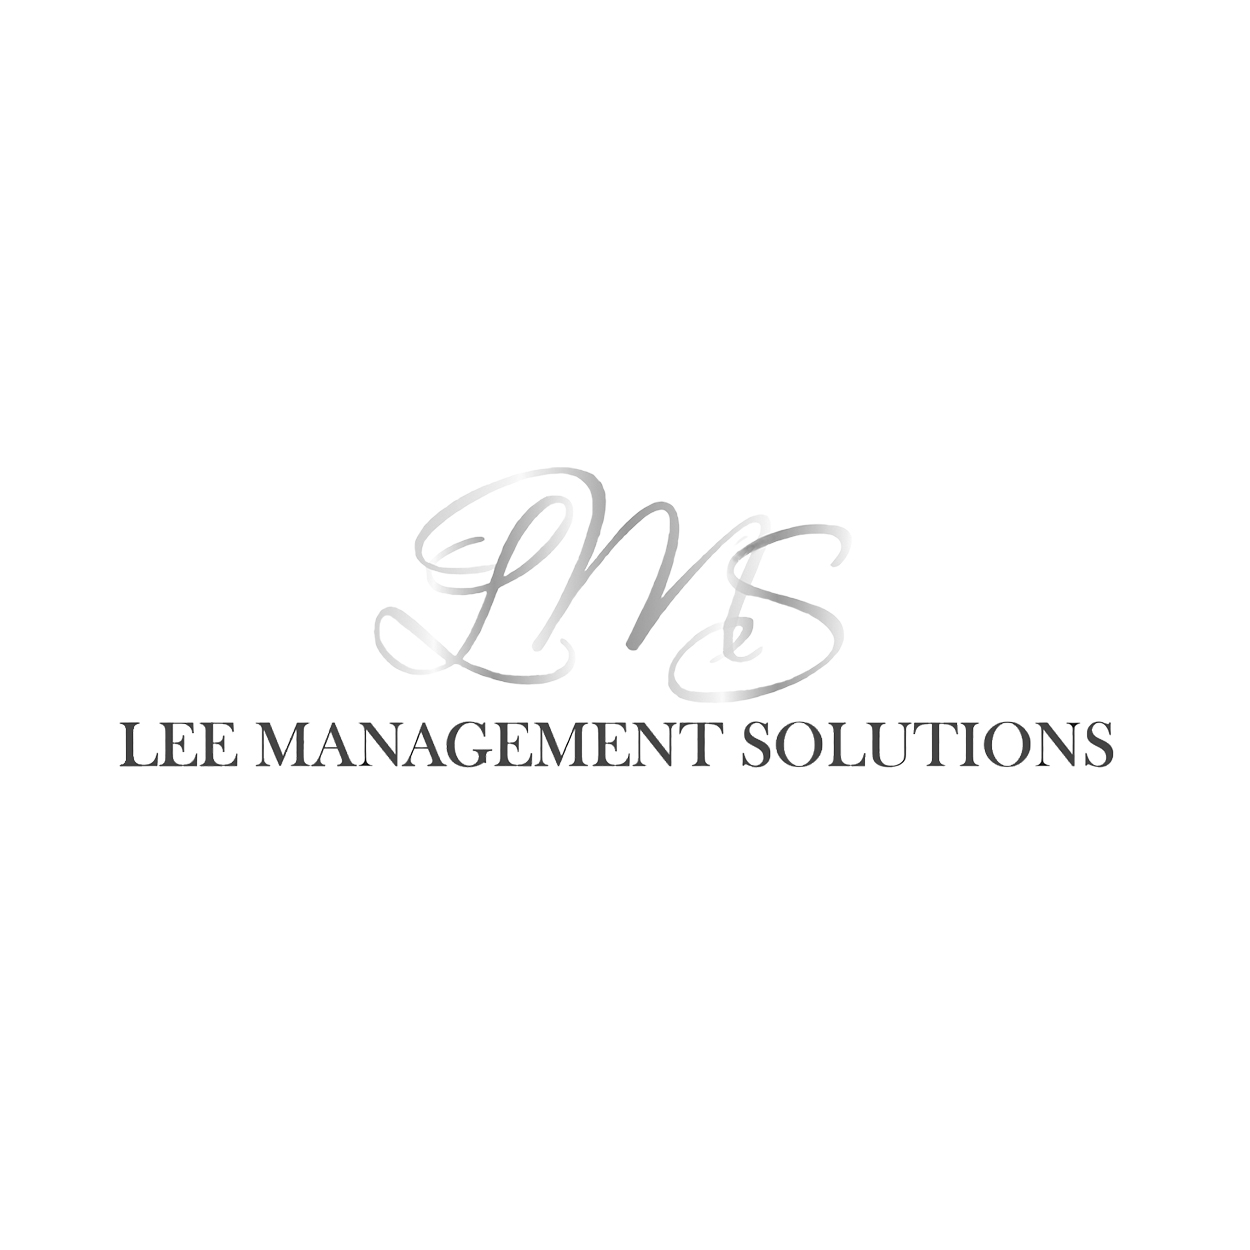 Lee Management Solutions logo